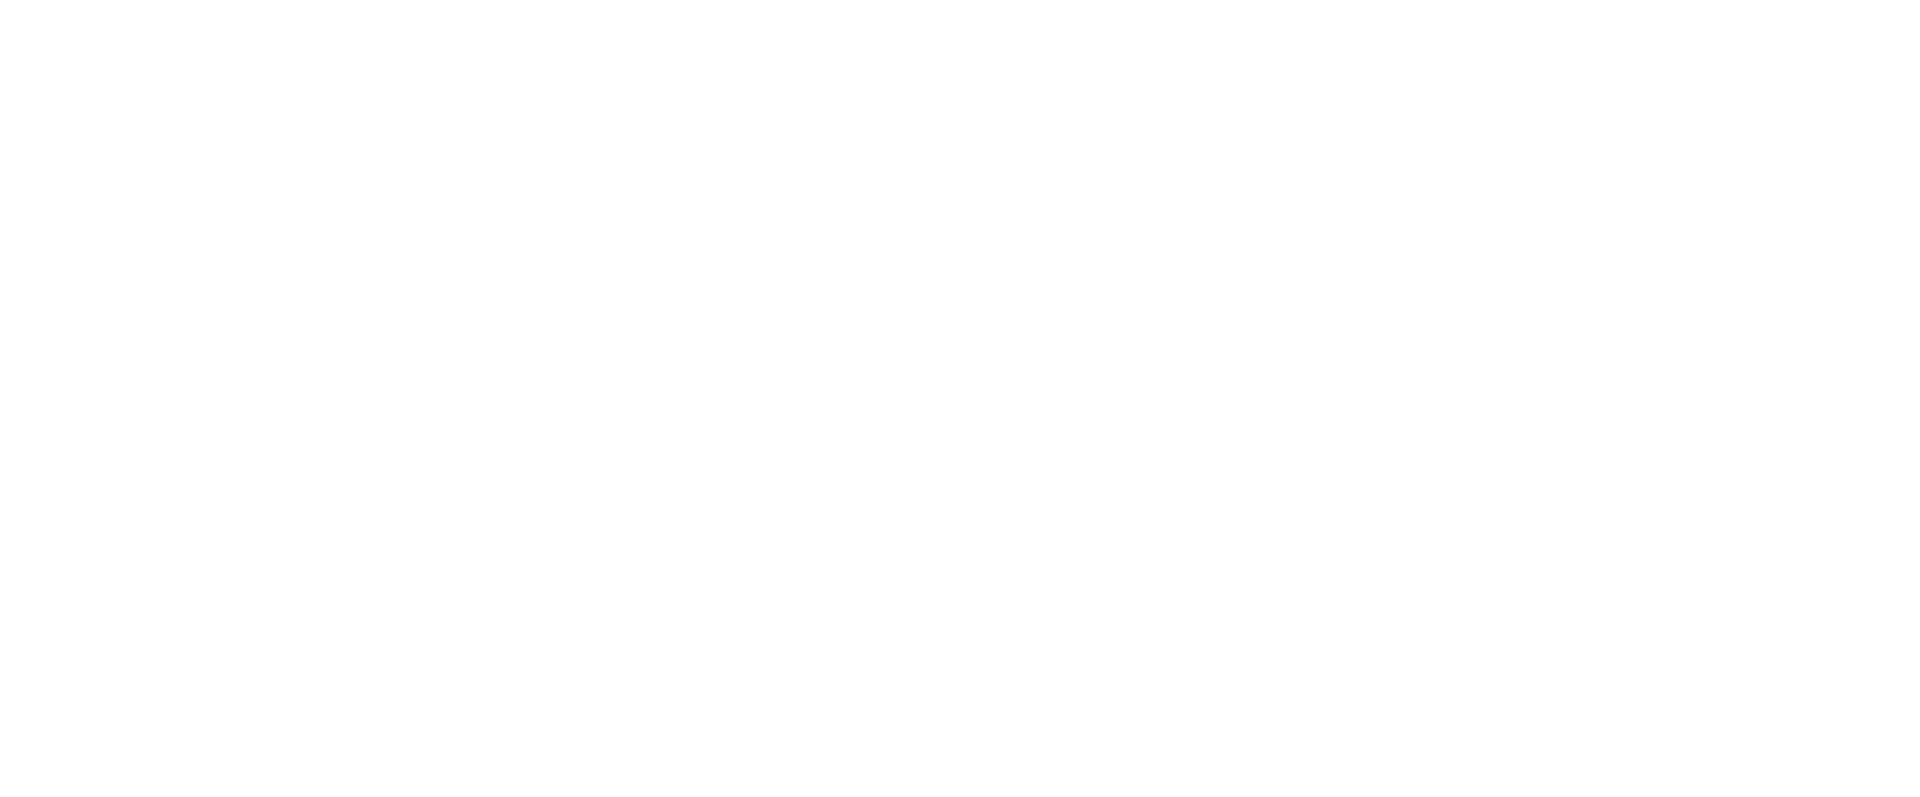 University of Greenwich International College logo